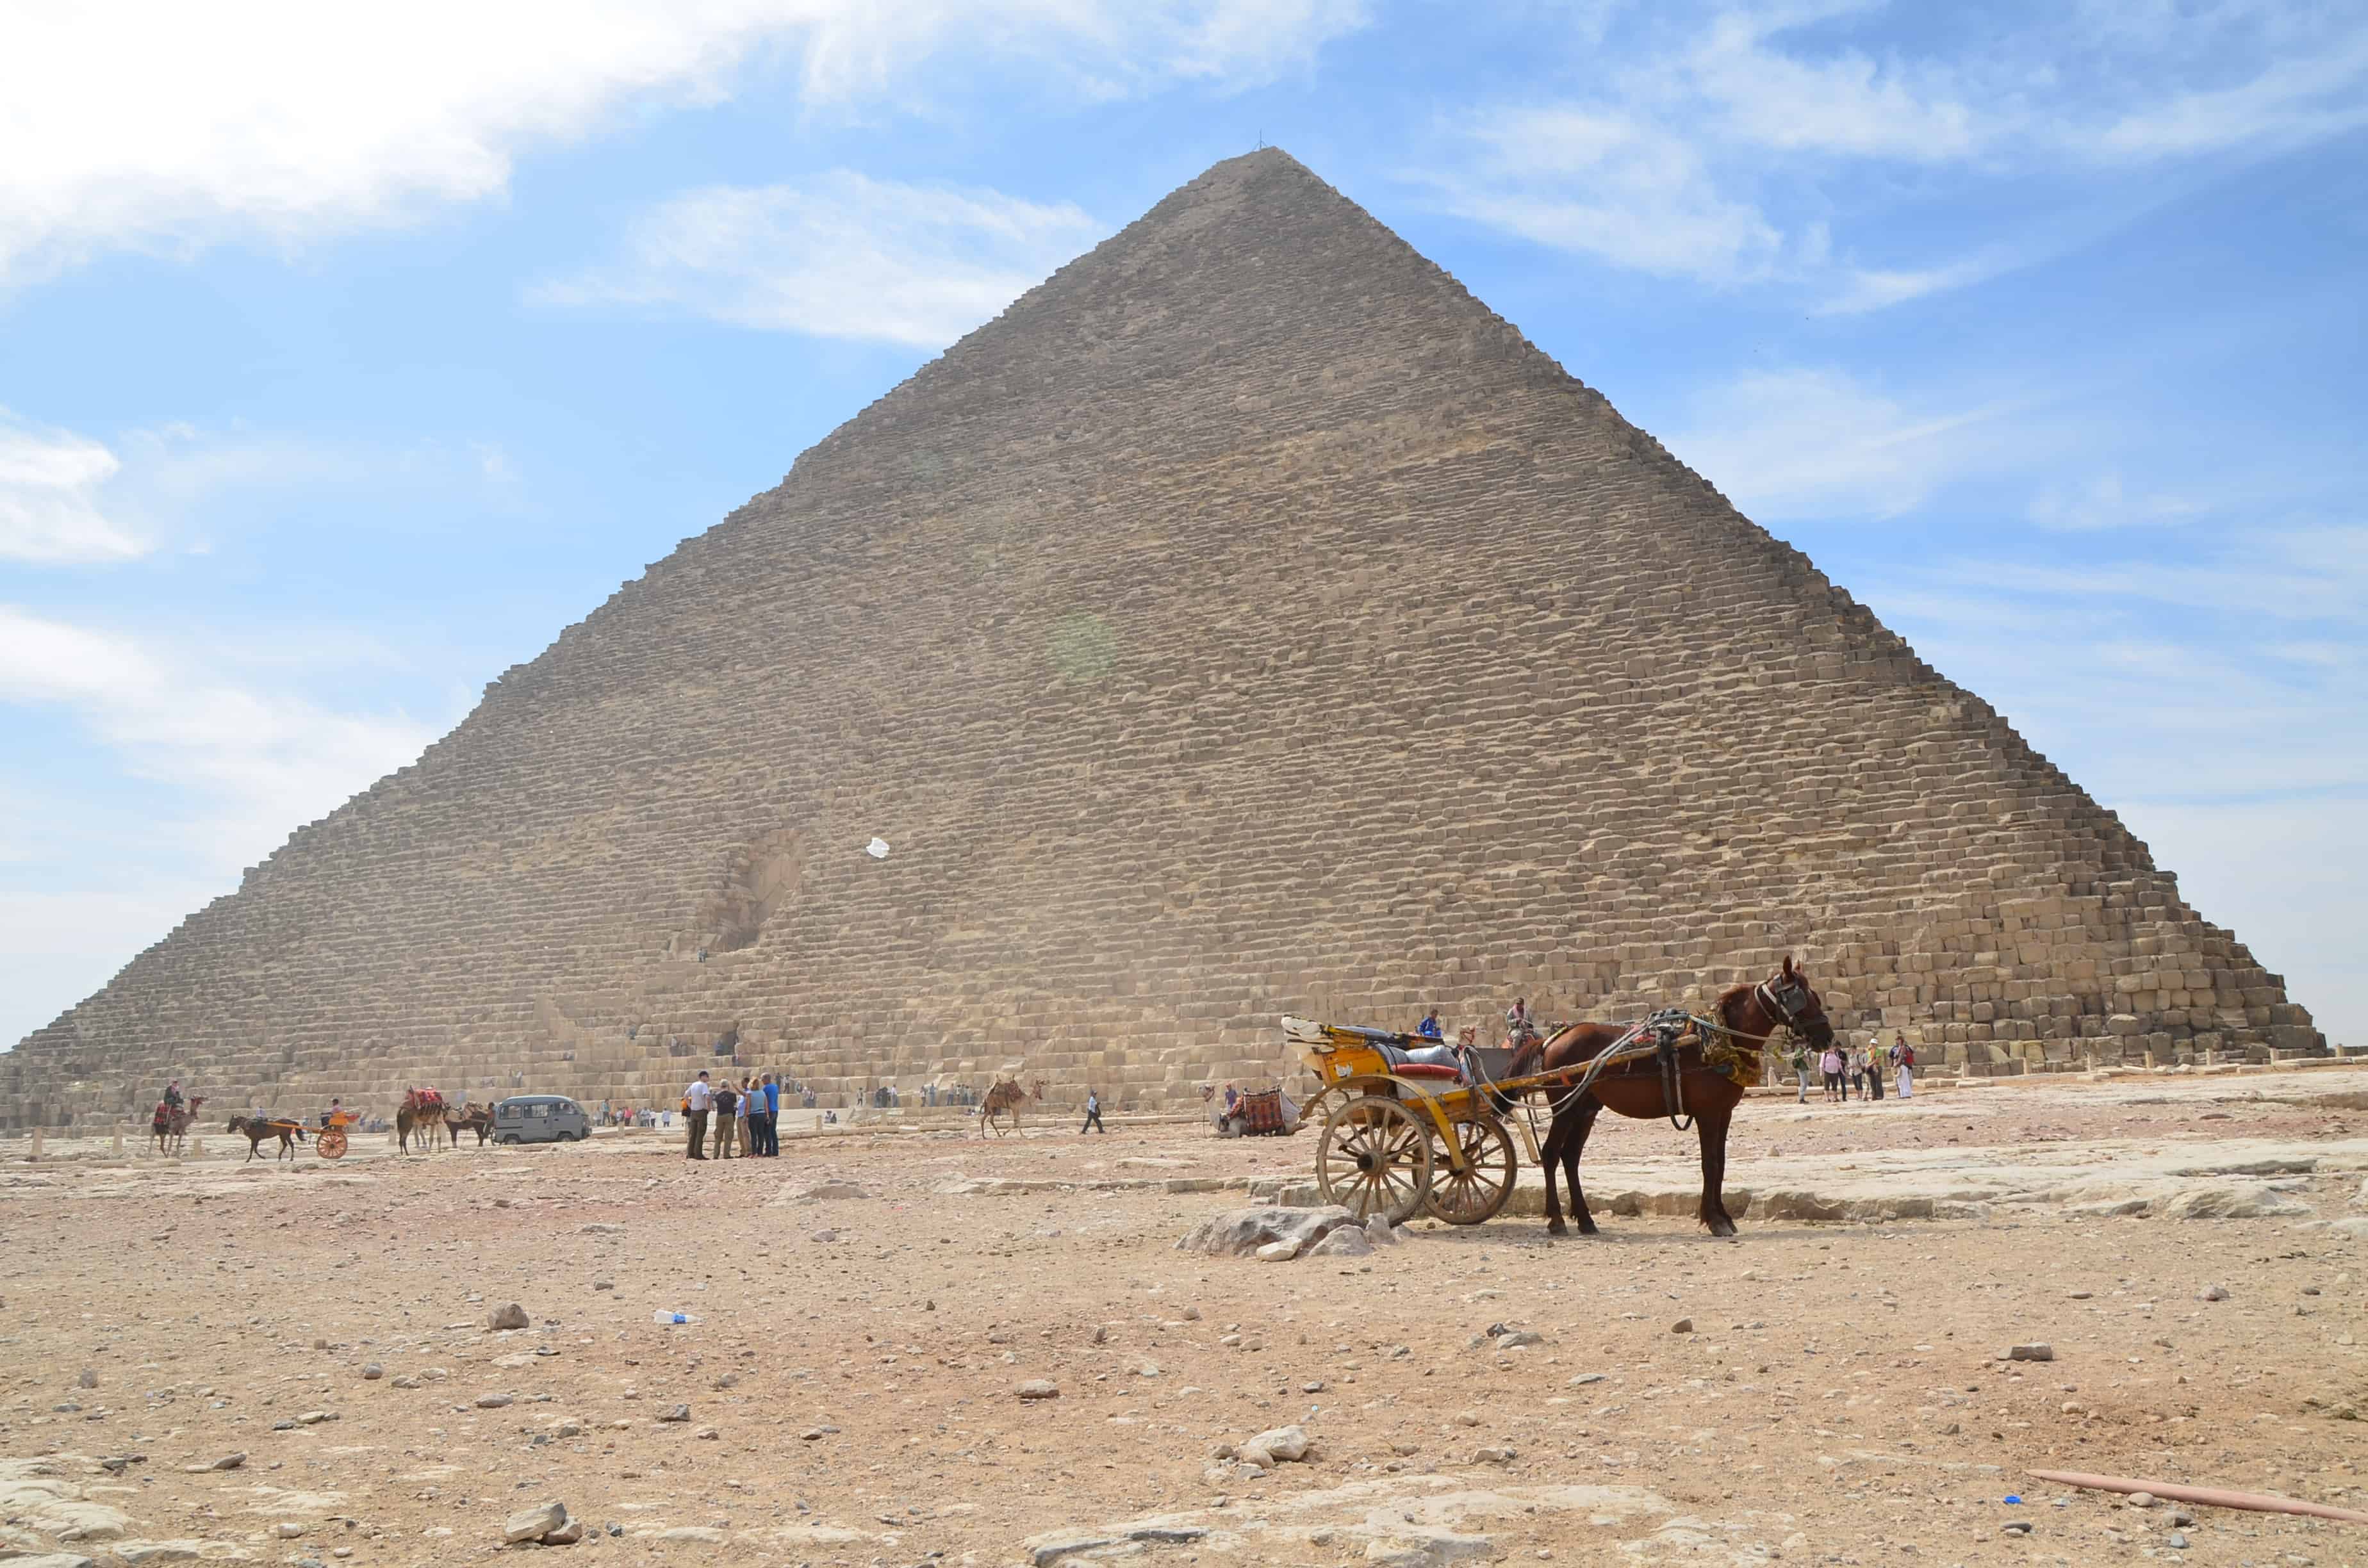 Pyramid of Khufu at the Pyramids of Giza in Egypt